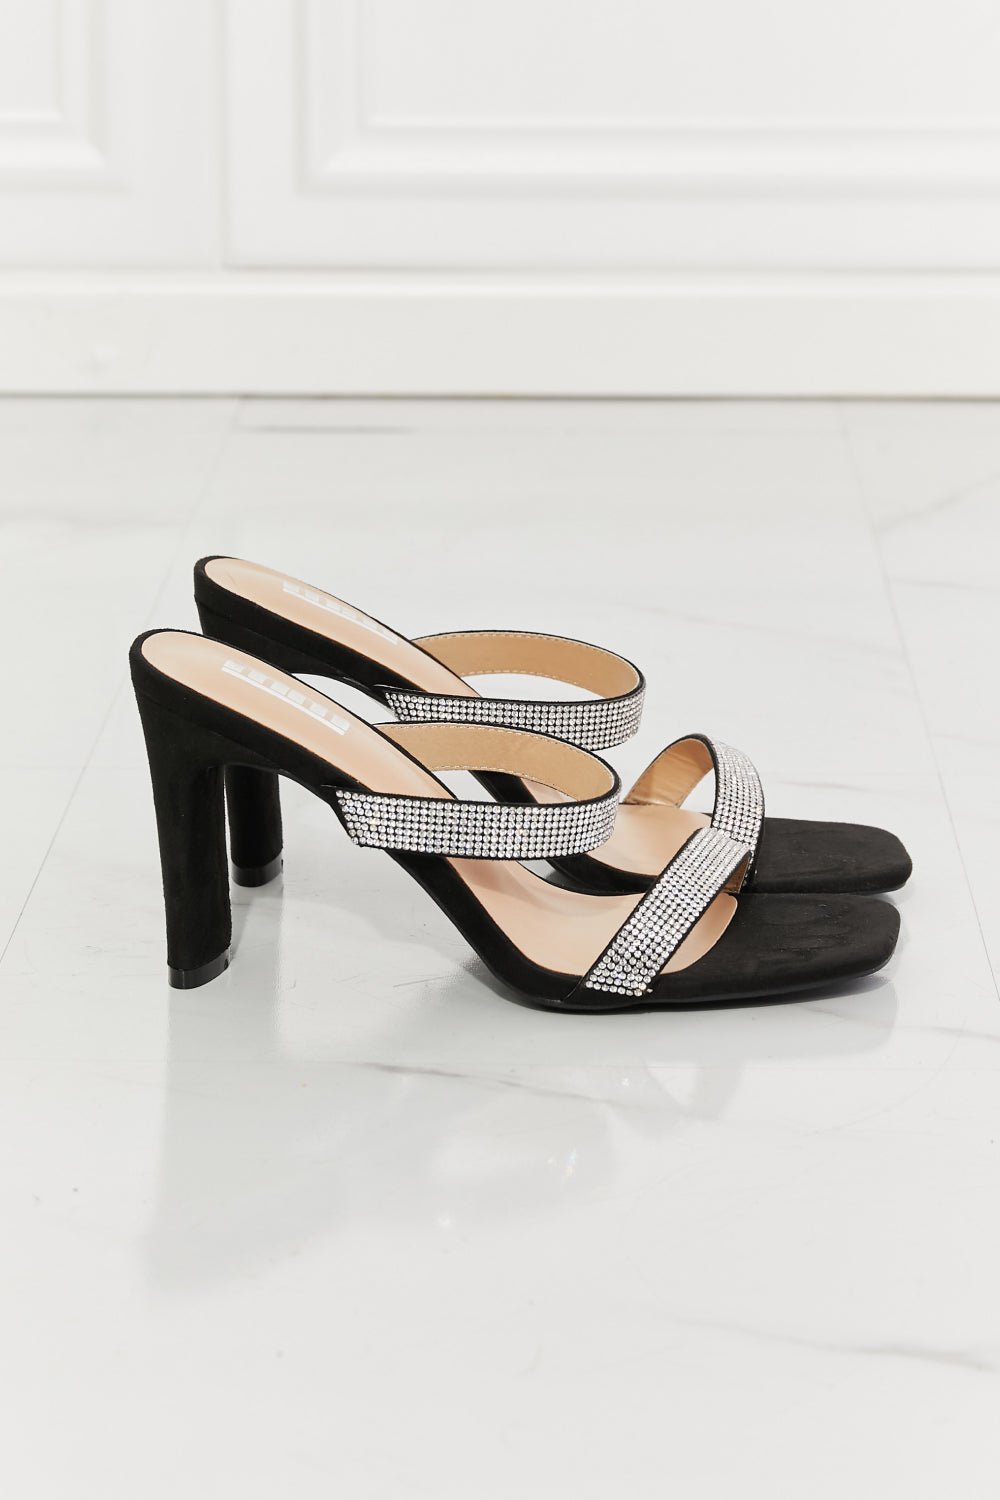 MMShoes Leave A Little Sparkle Rhinestone Block Heel Sandal in Black - pvmark